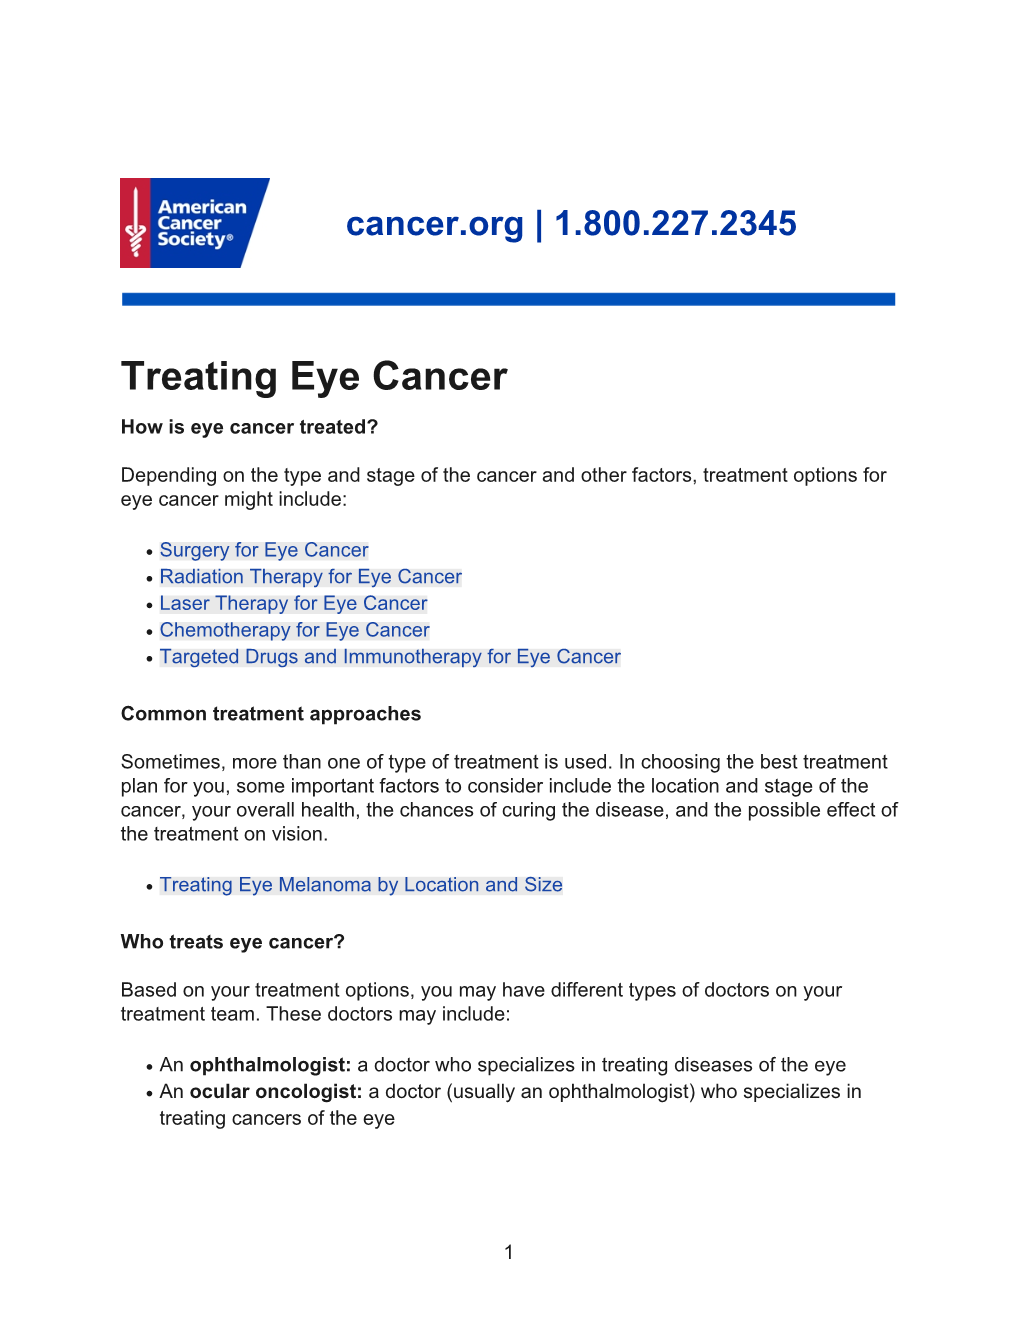 Treating Eye Cancer How Is Eye Cancer Treated?